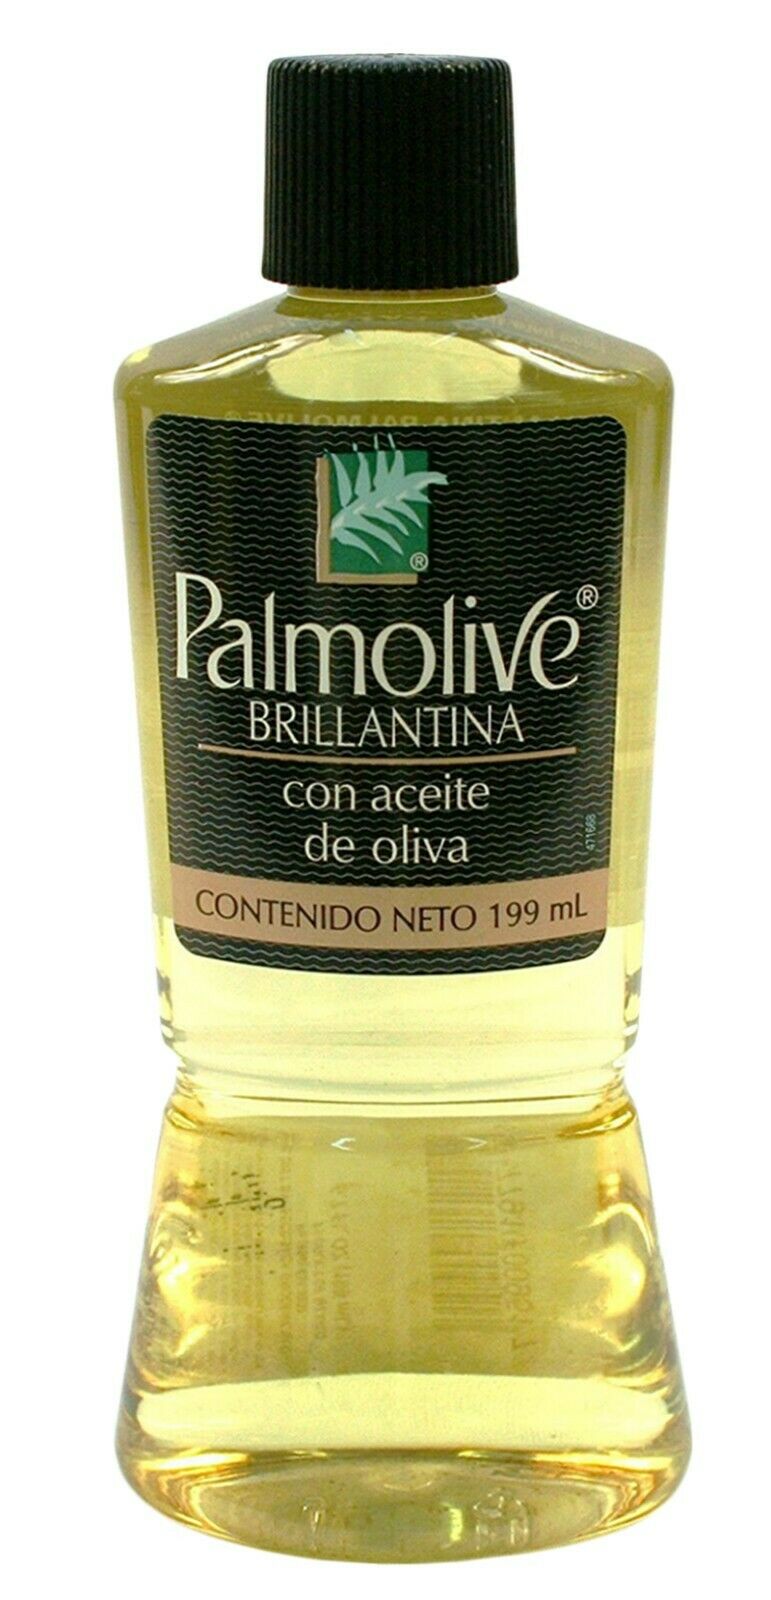 Palmolive Brillantina Con Aceite de Oliva, 199ml